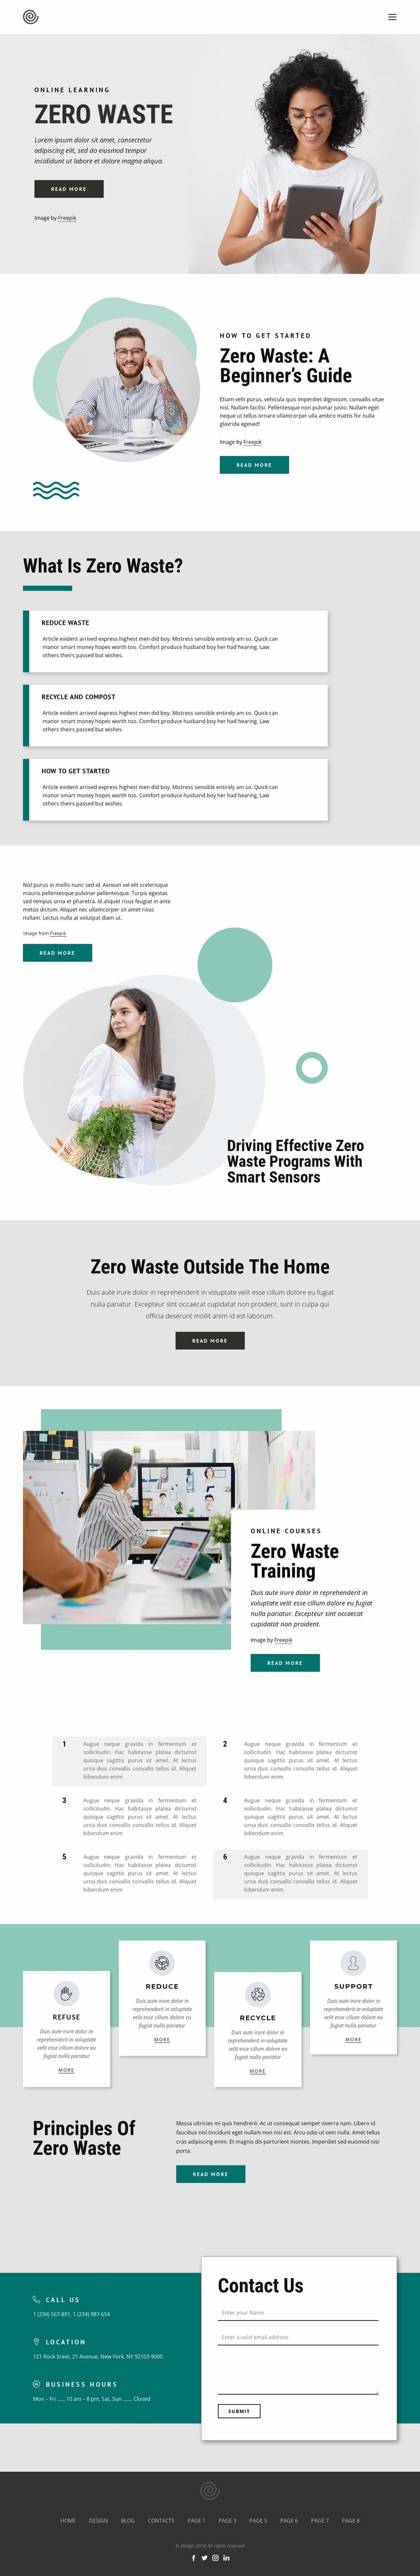 Zero waste courses Web Page Design